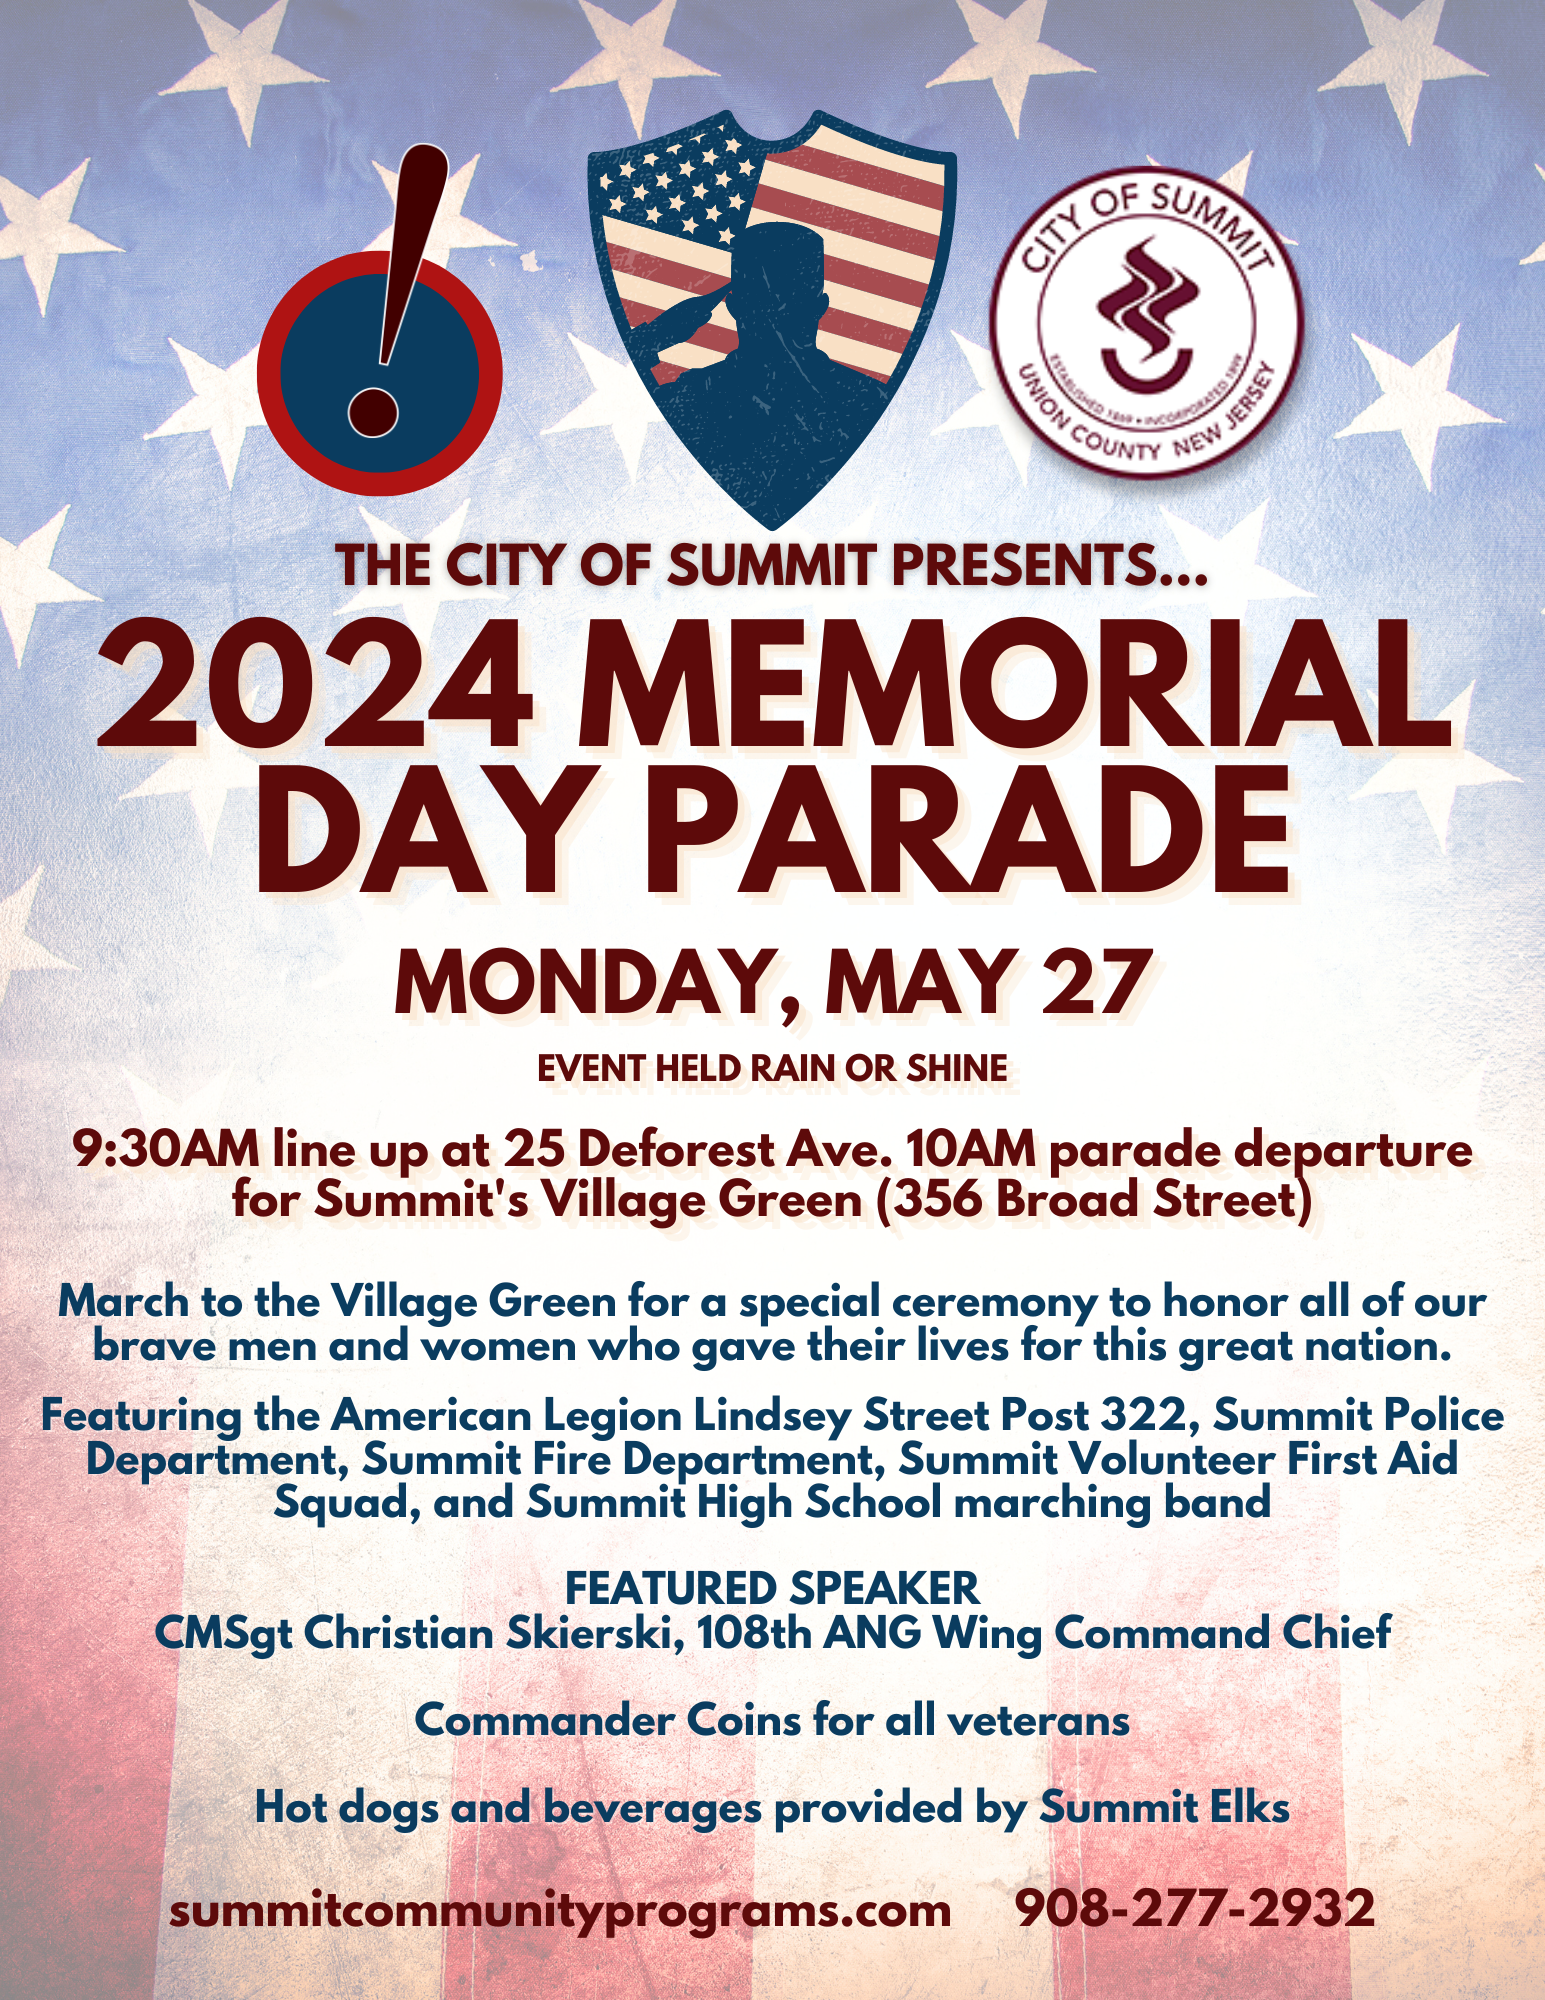 Summit 2024 Memorial Day Parade set for May 27th